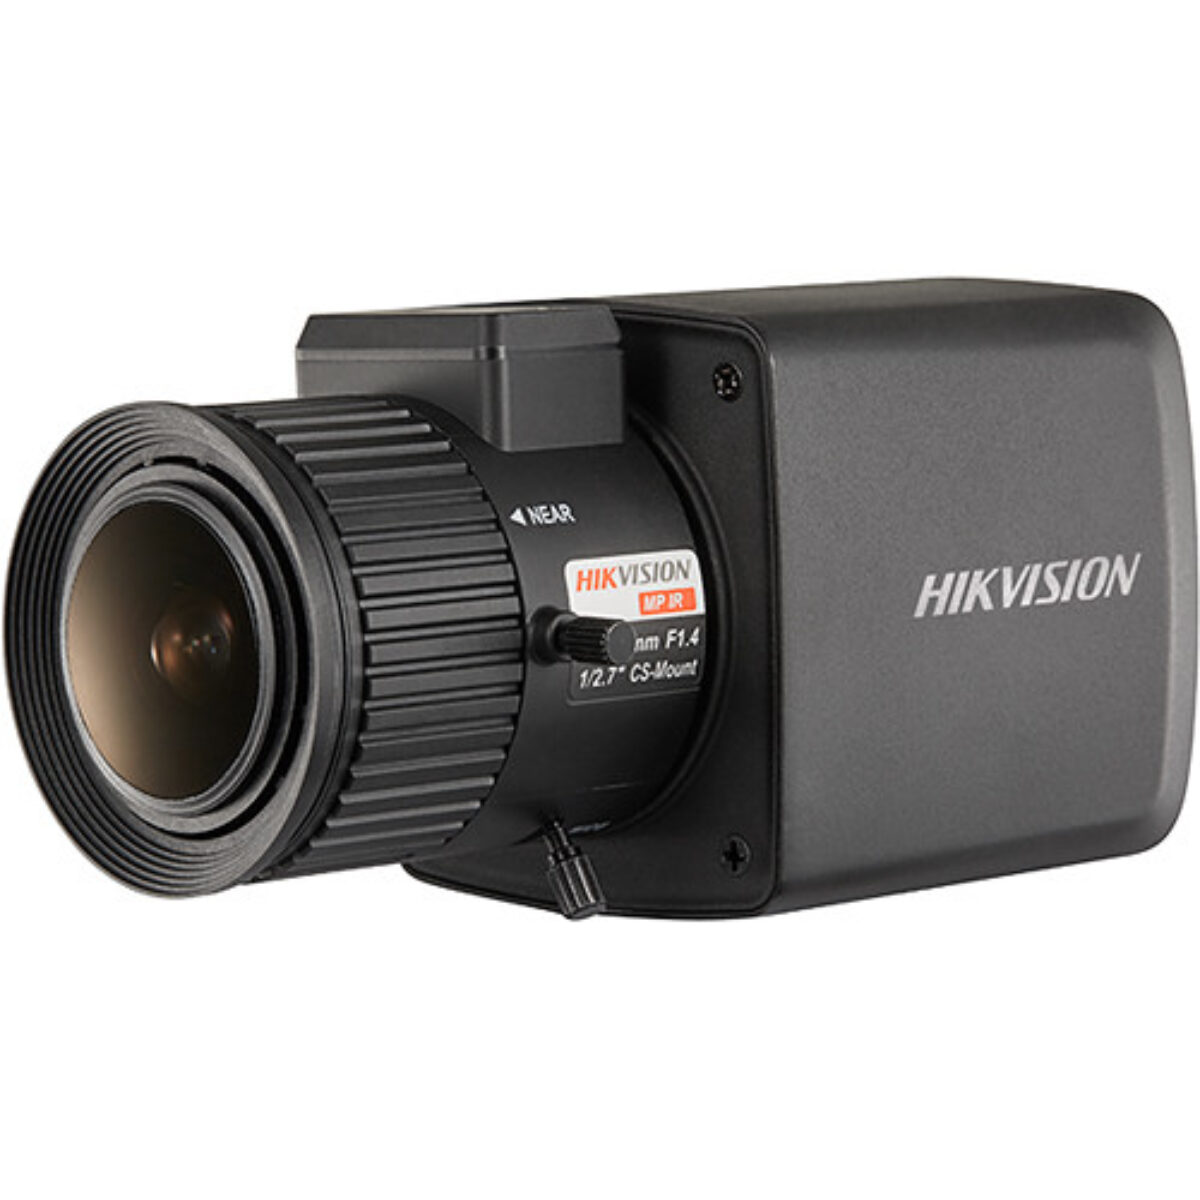 Hikvision Analog Camera 2MP Light Box Pro Series – DS-2CC12D8T-AMM